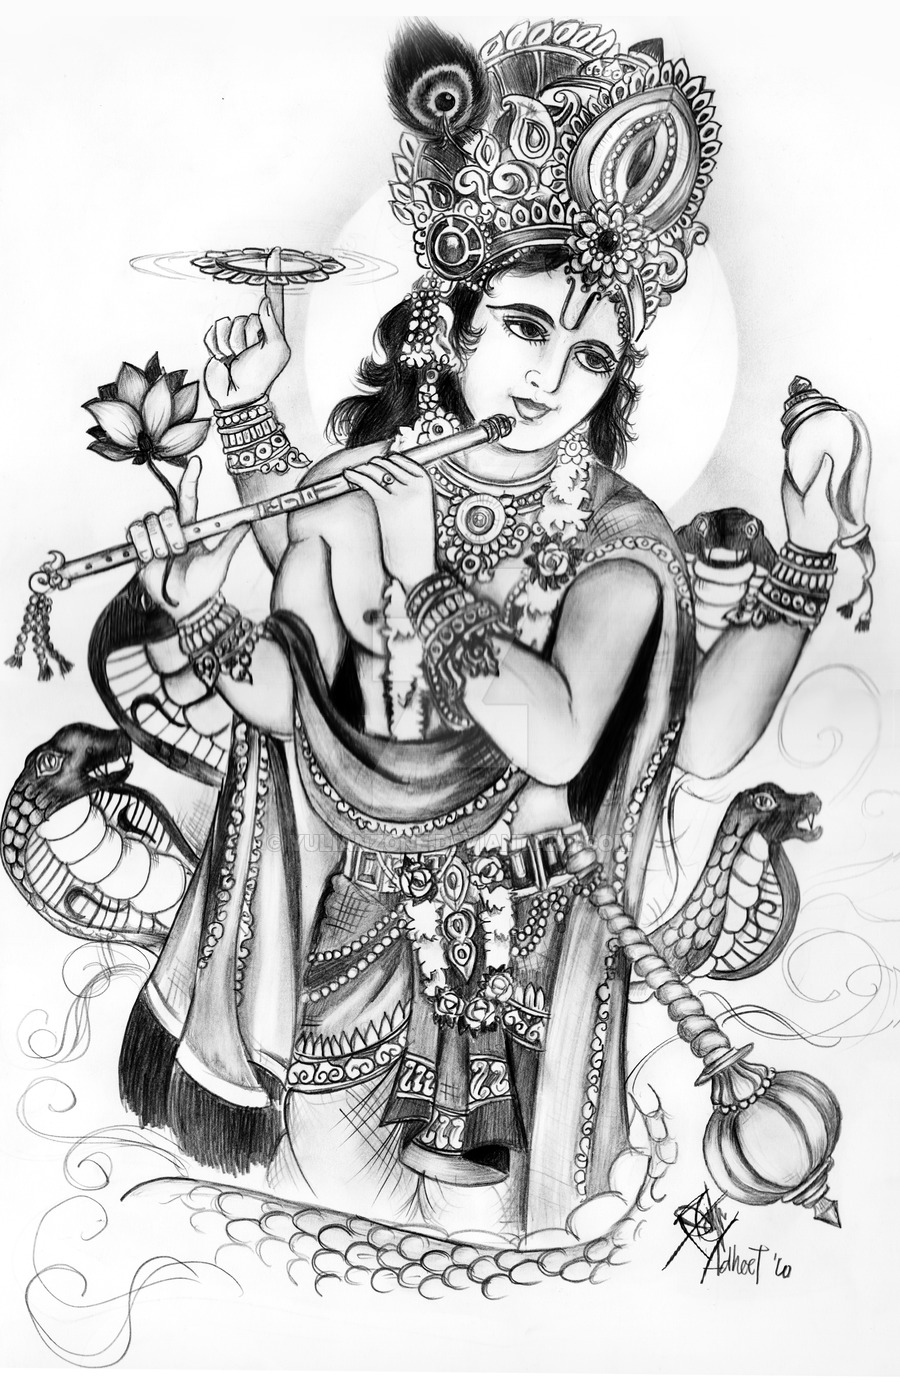 Vishnu by CristianoReina on DeviantArt